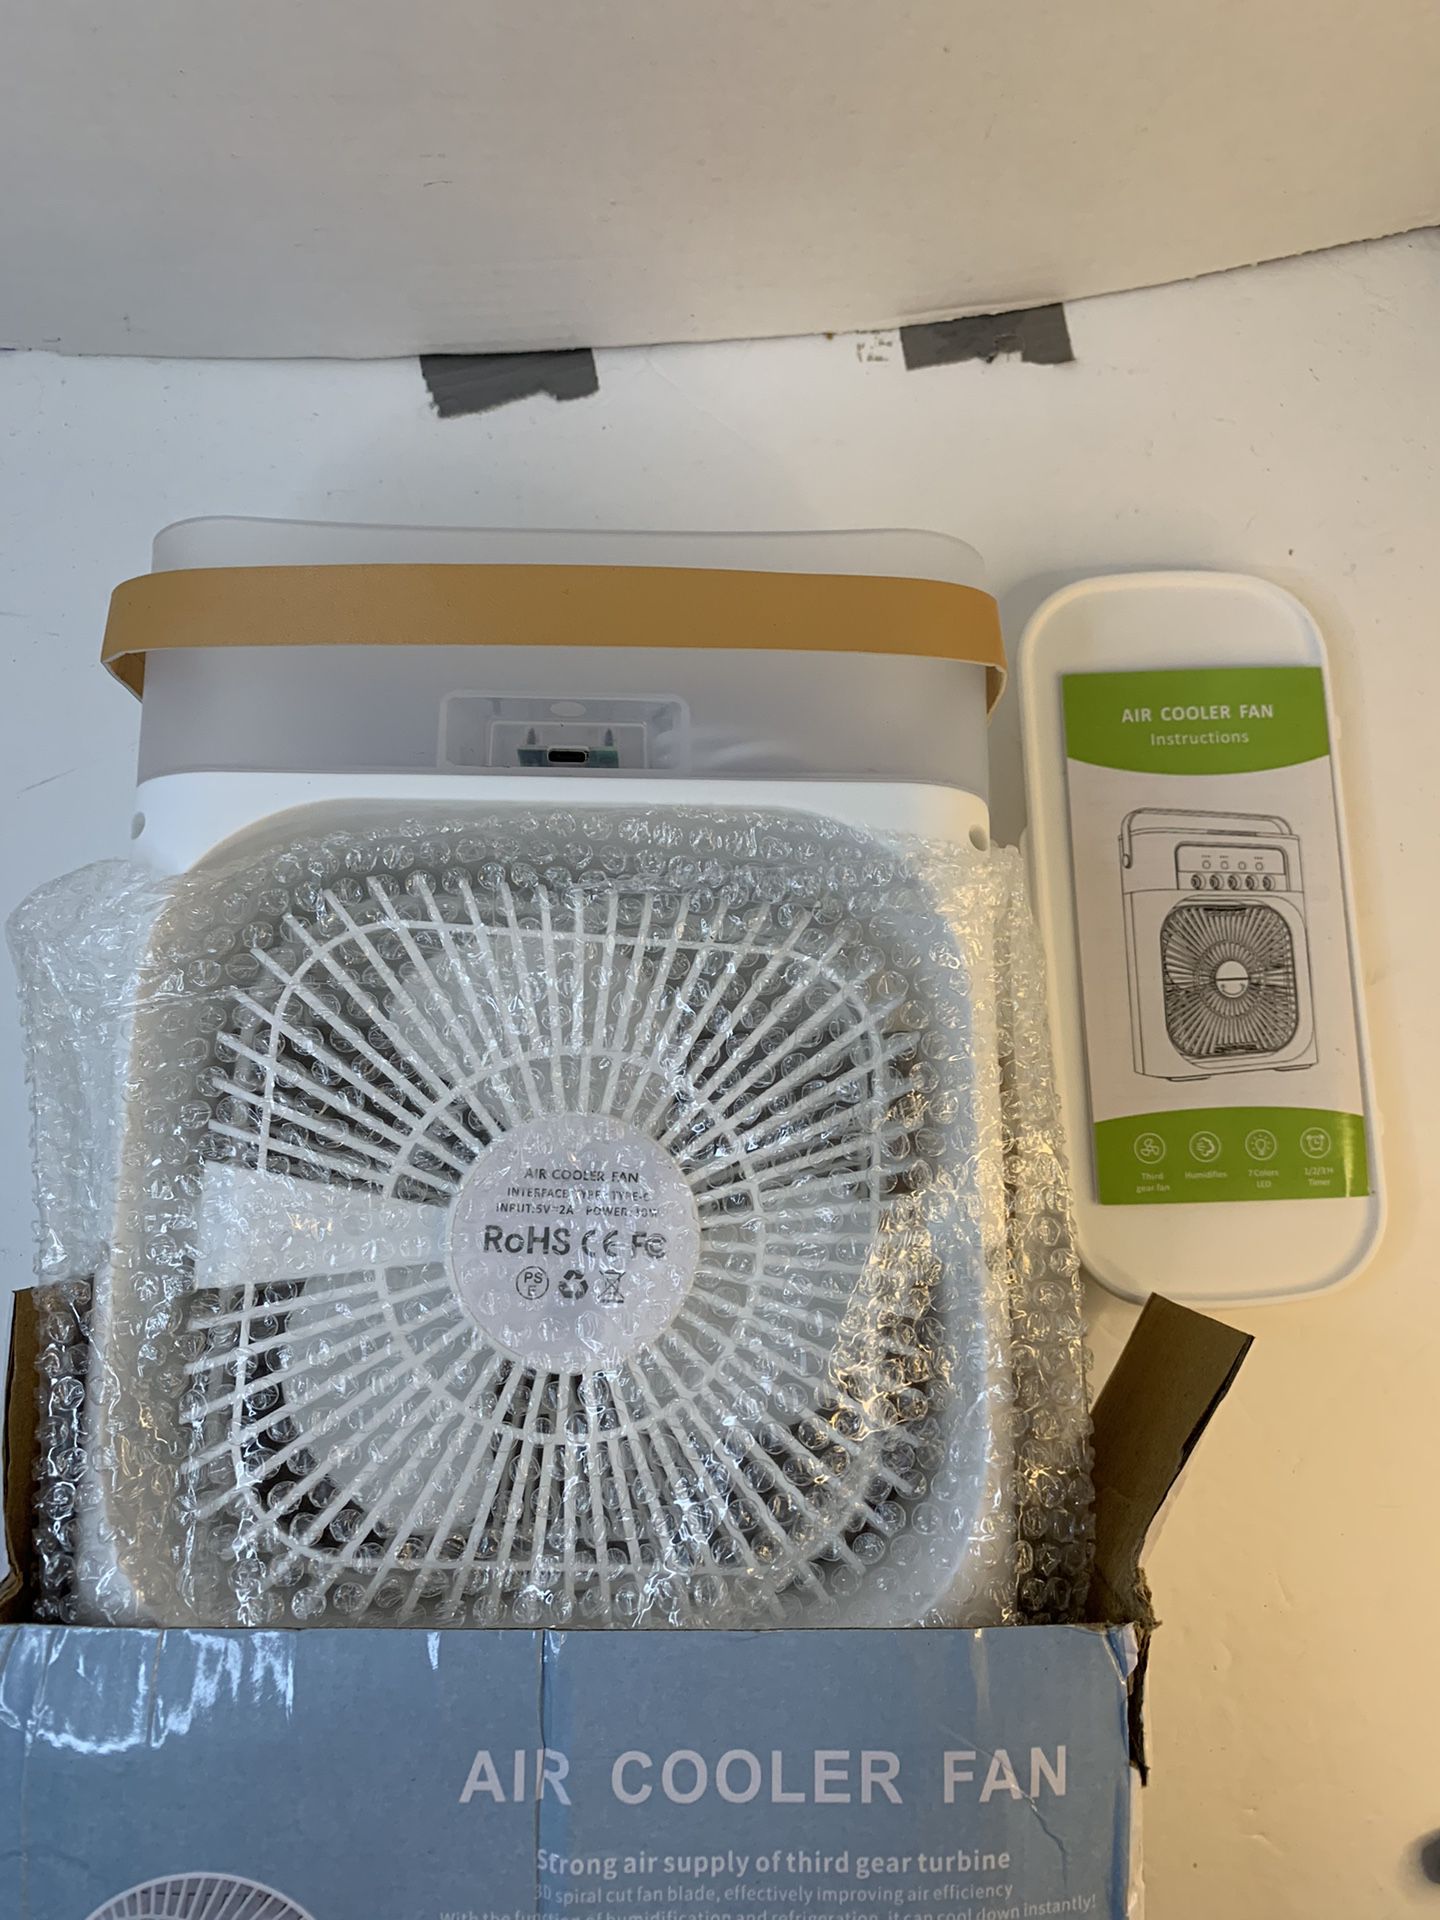 Mini Air Conditioner Evaporative Cooling  Fan